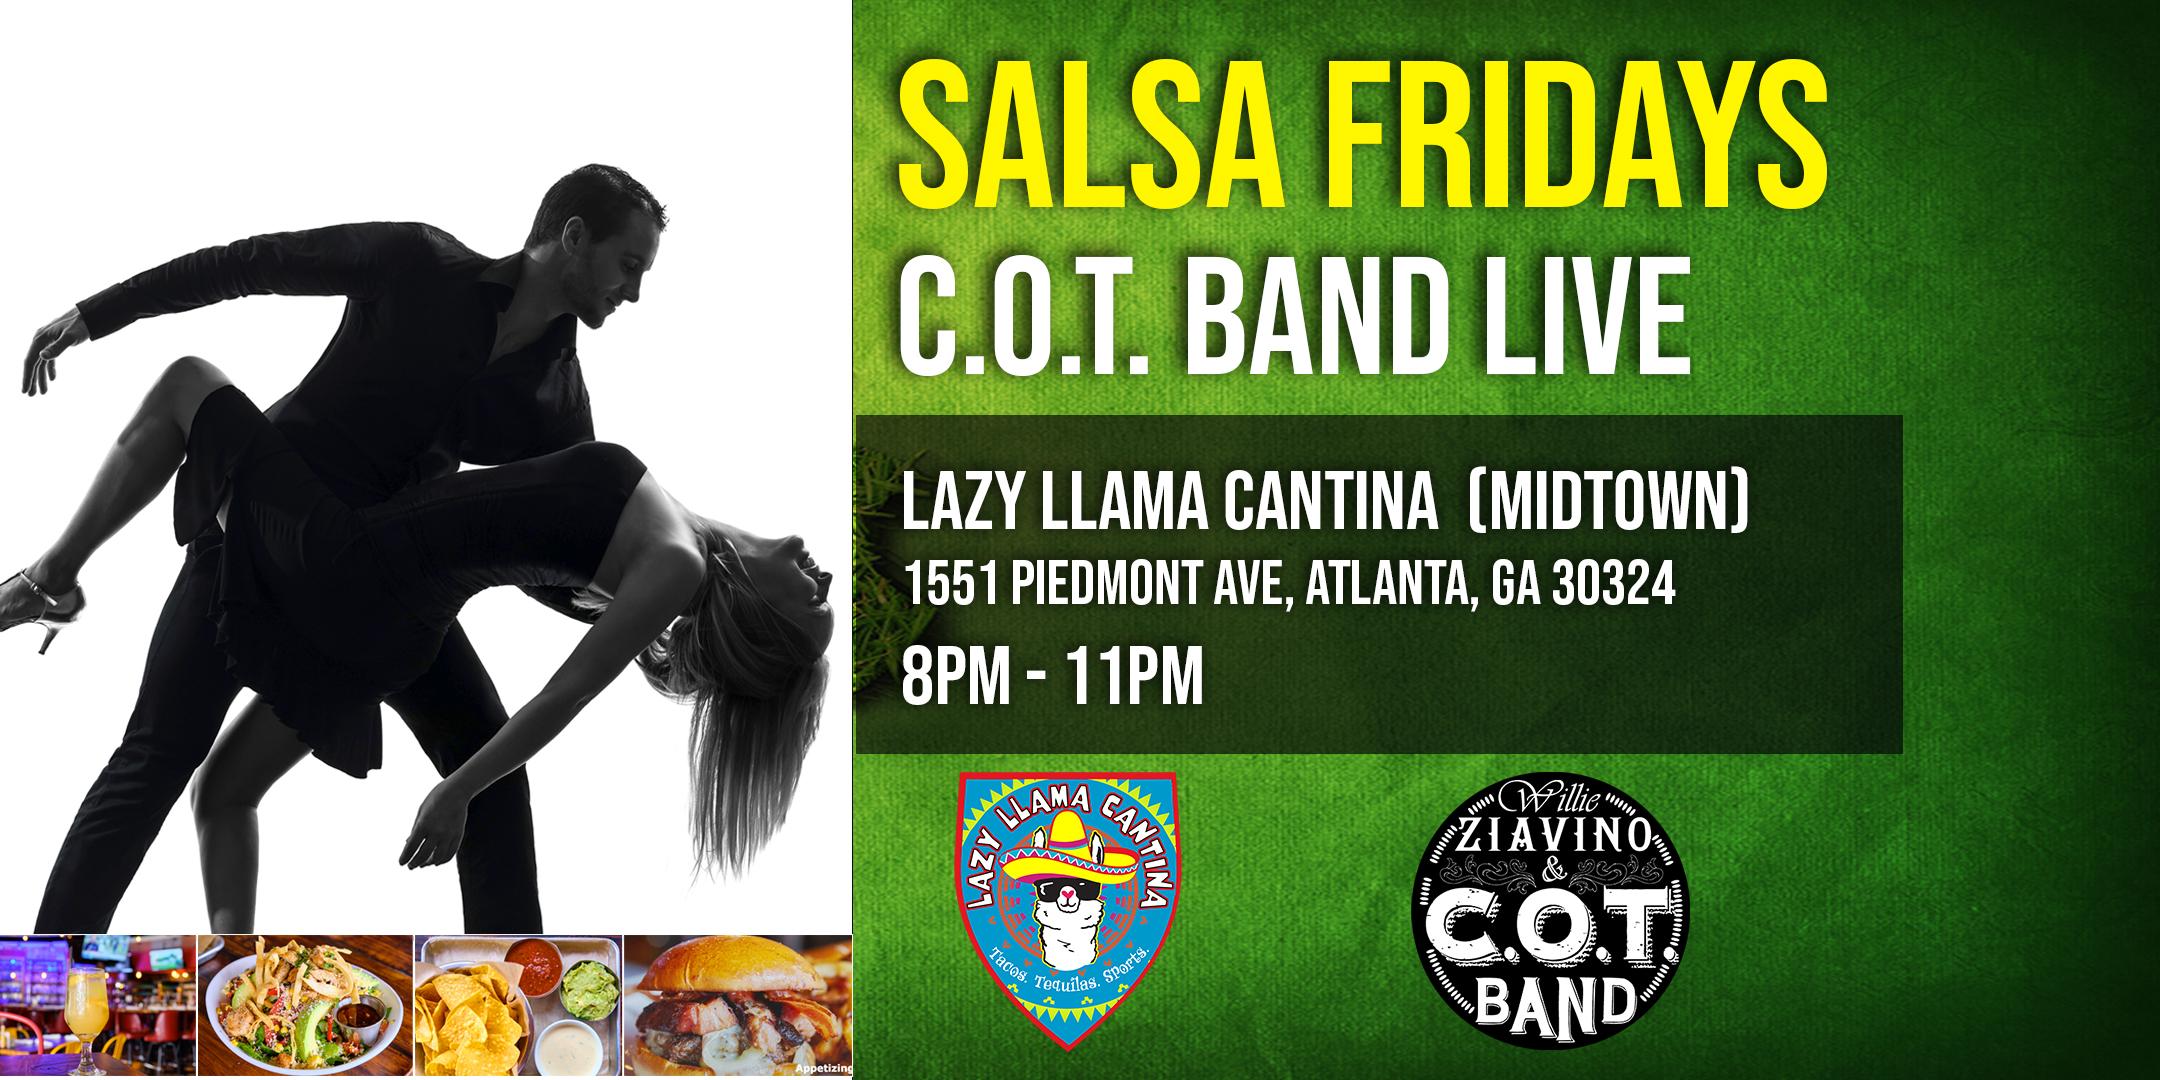 Salsa Friday Nights in Midtown - Live Latin Music Band - Salsa Dance